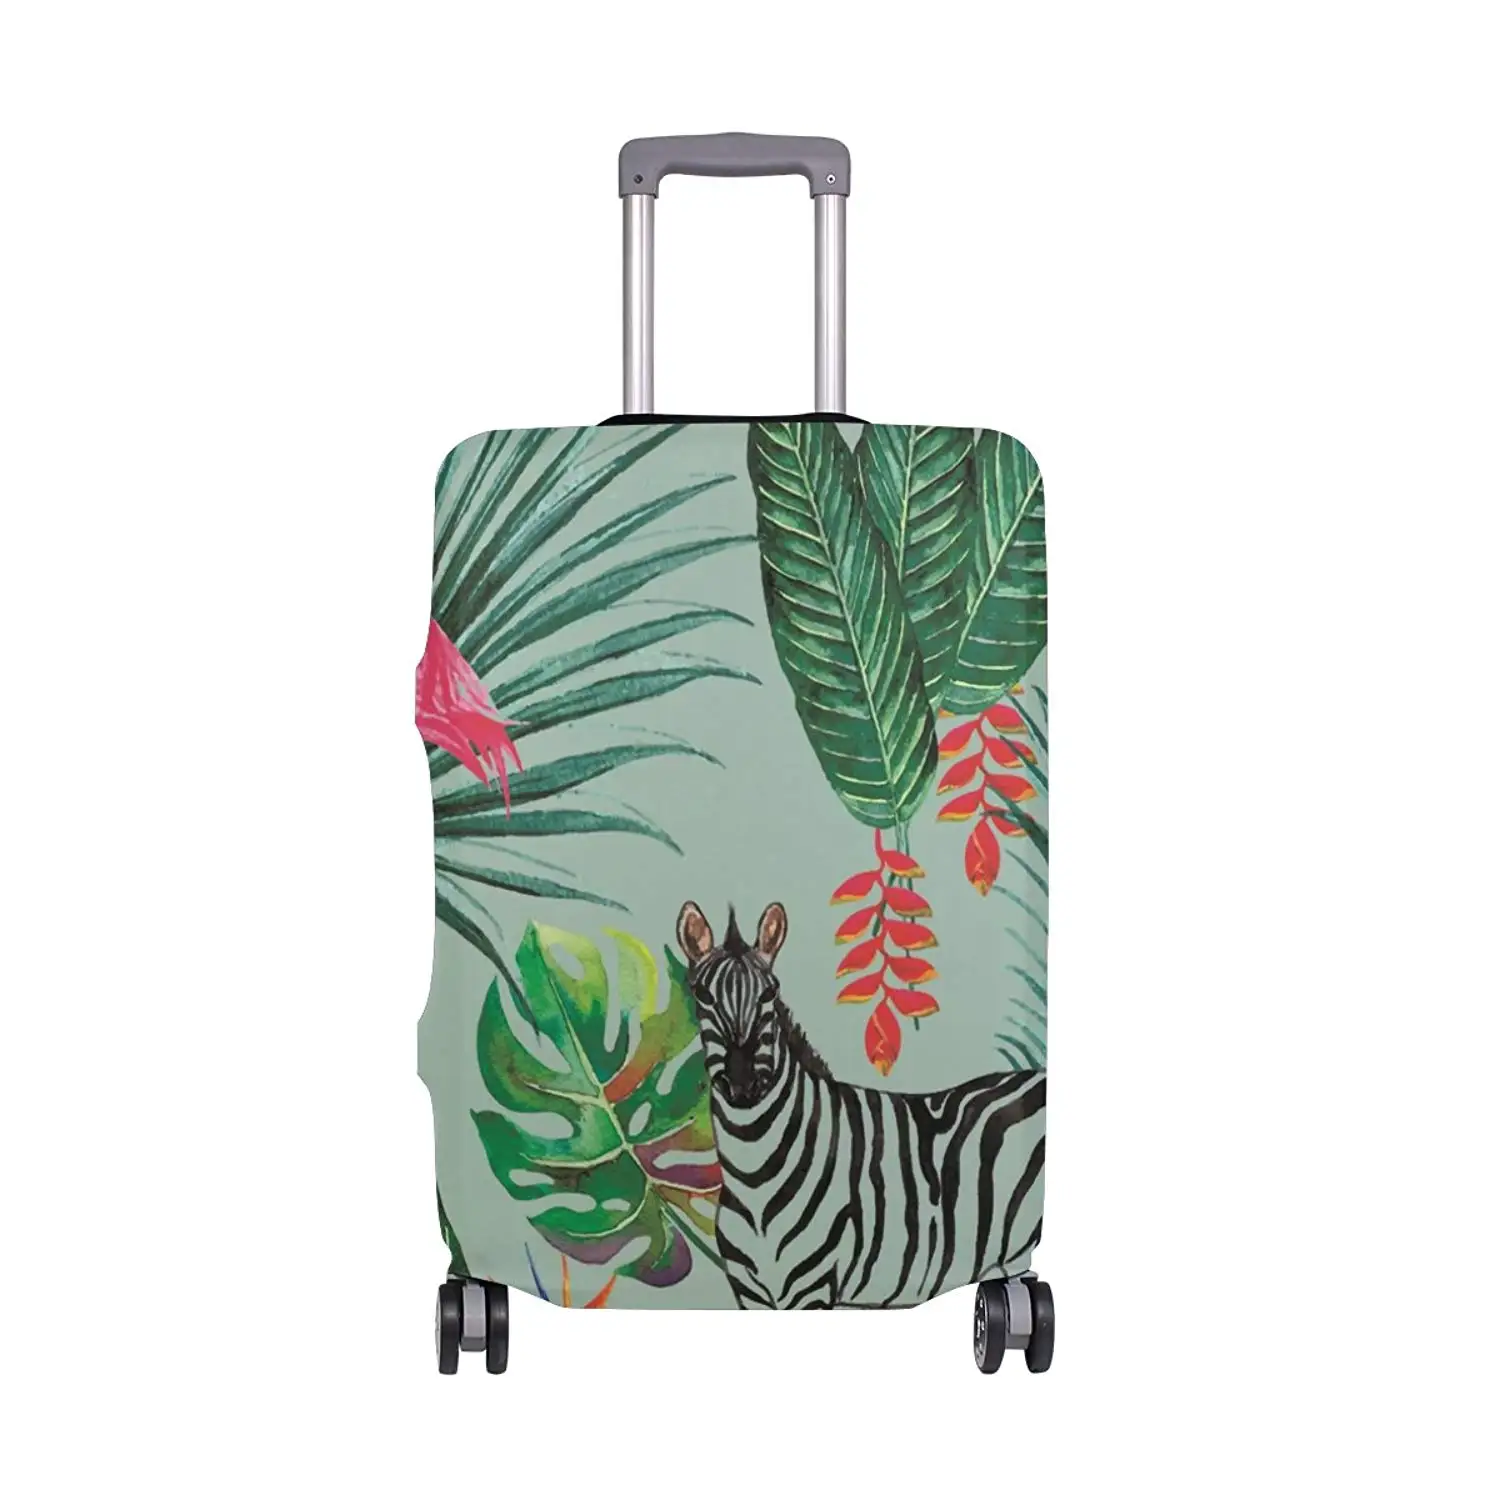 Cheap Zebra Suitcase, find Zebra Suitcase deals on line at Alibaba.com